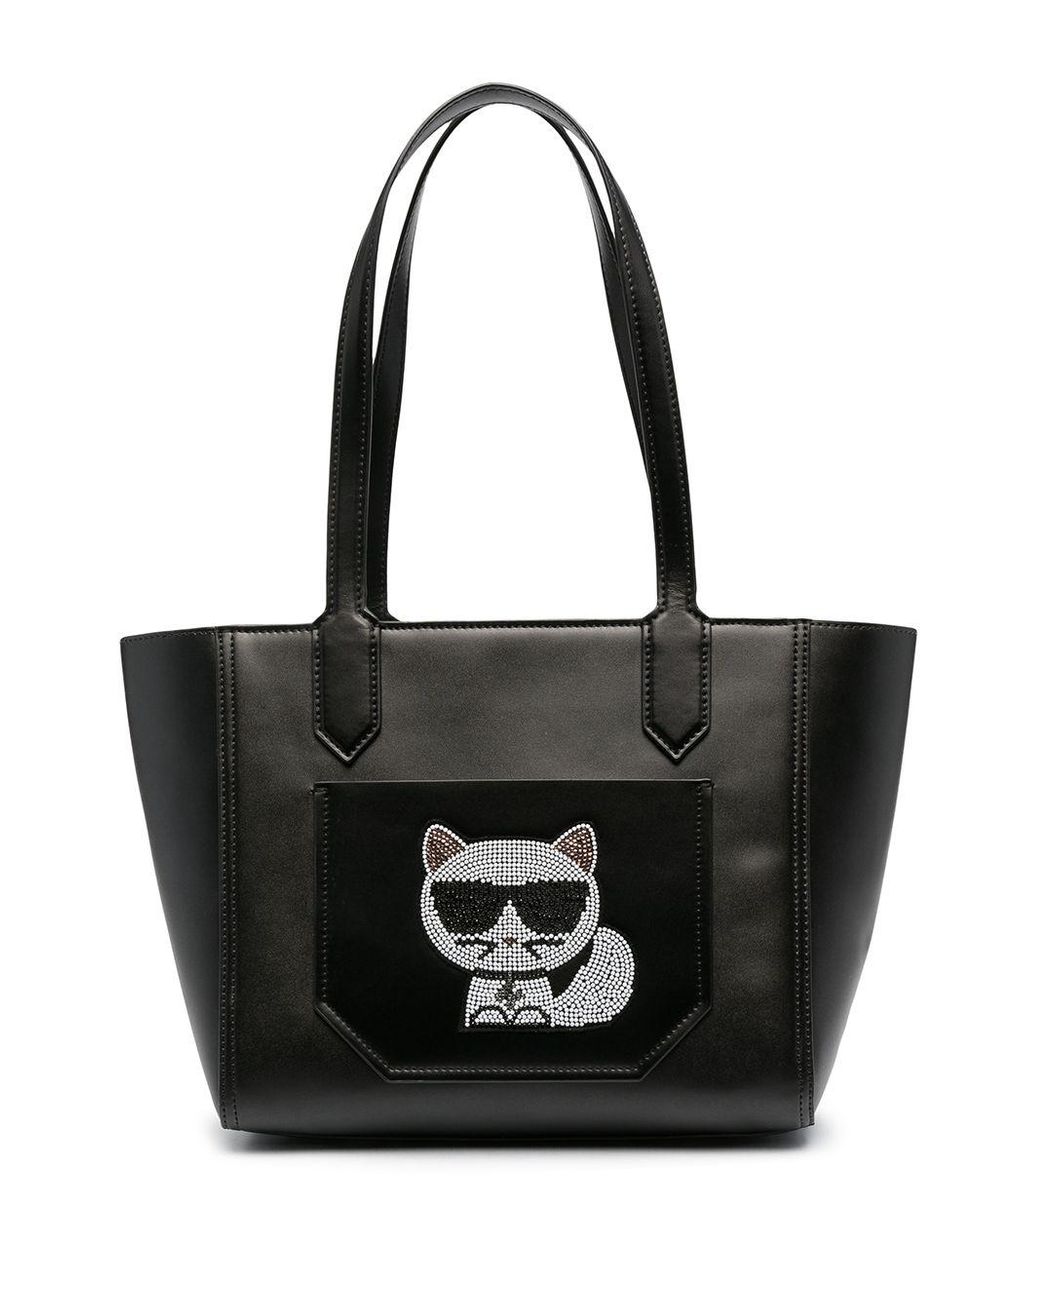 Karl Lagerfeld K/choupette Tote Bag in Black - Lyst